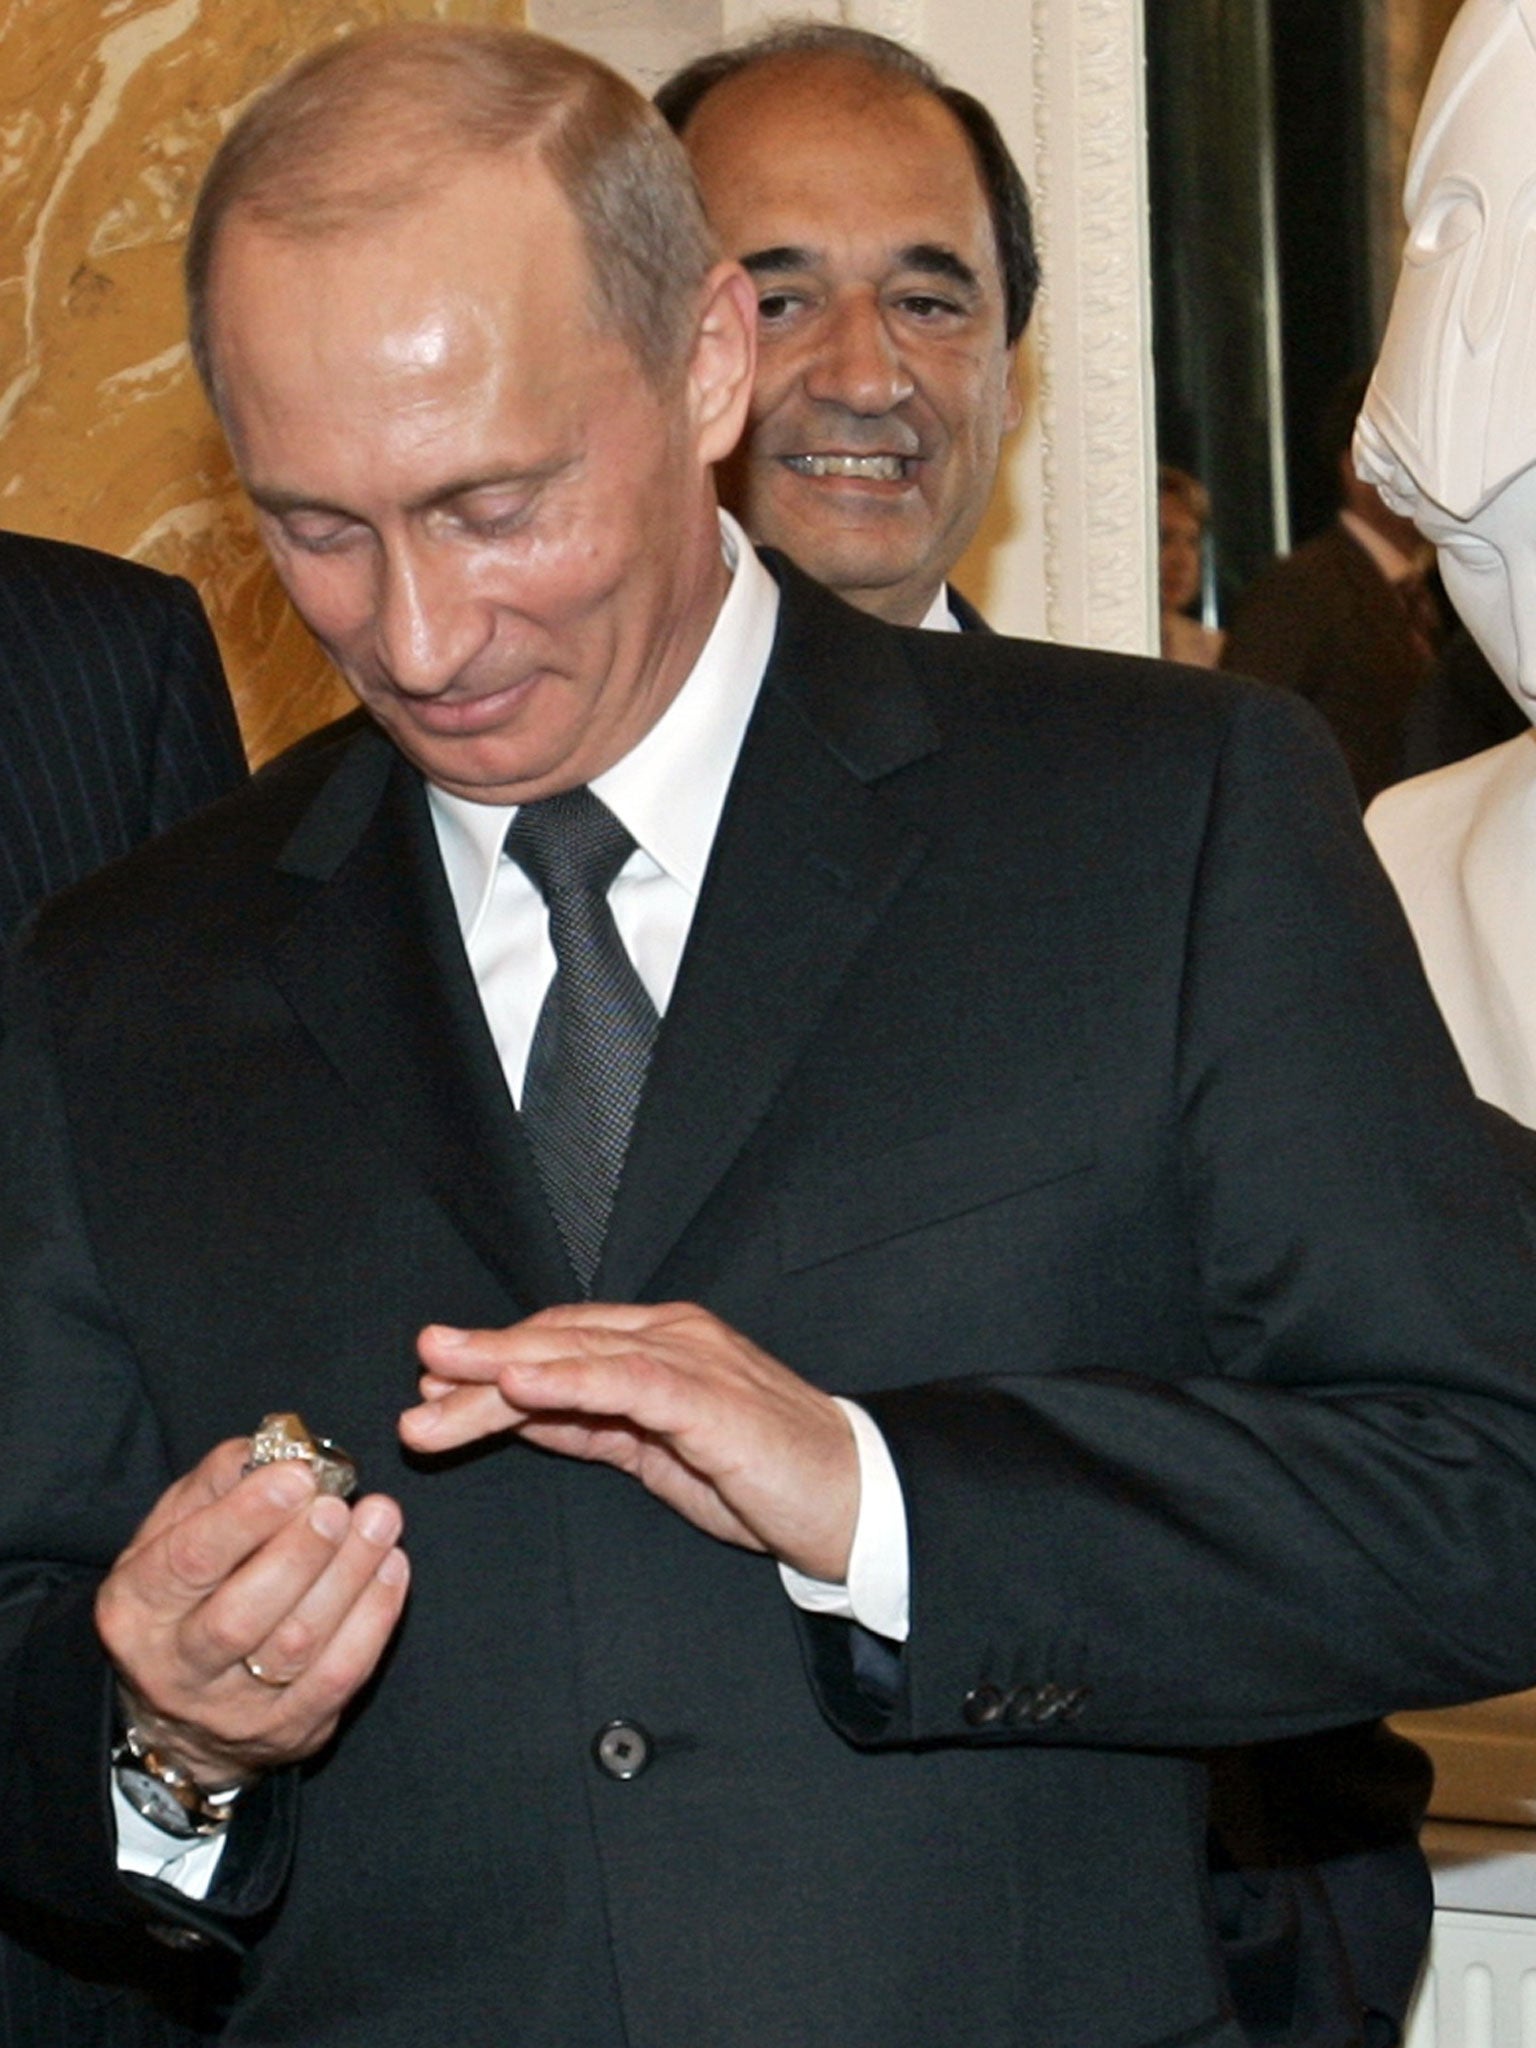 Patriots-ejer: Putin stjal min Super Bowl-ring | BT Amerikansk Fodbold -  www.bt.dk